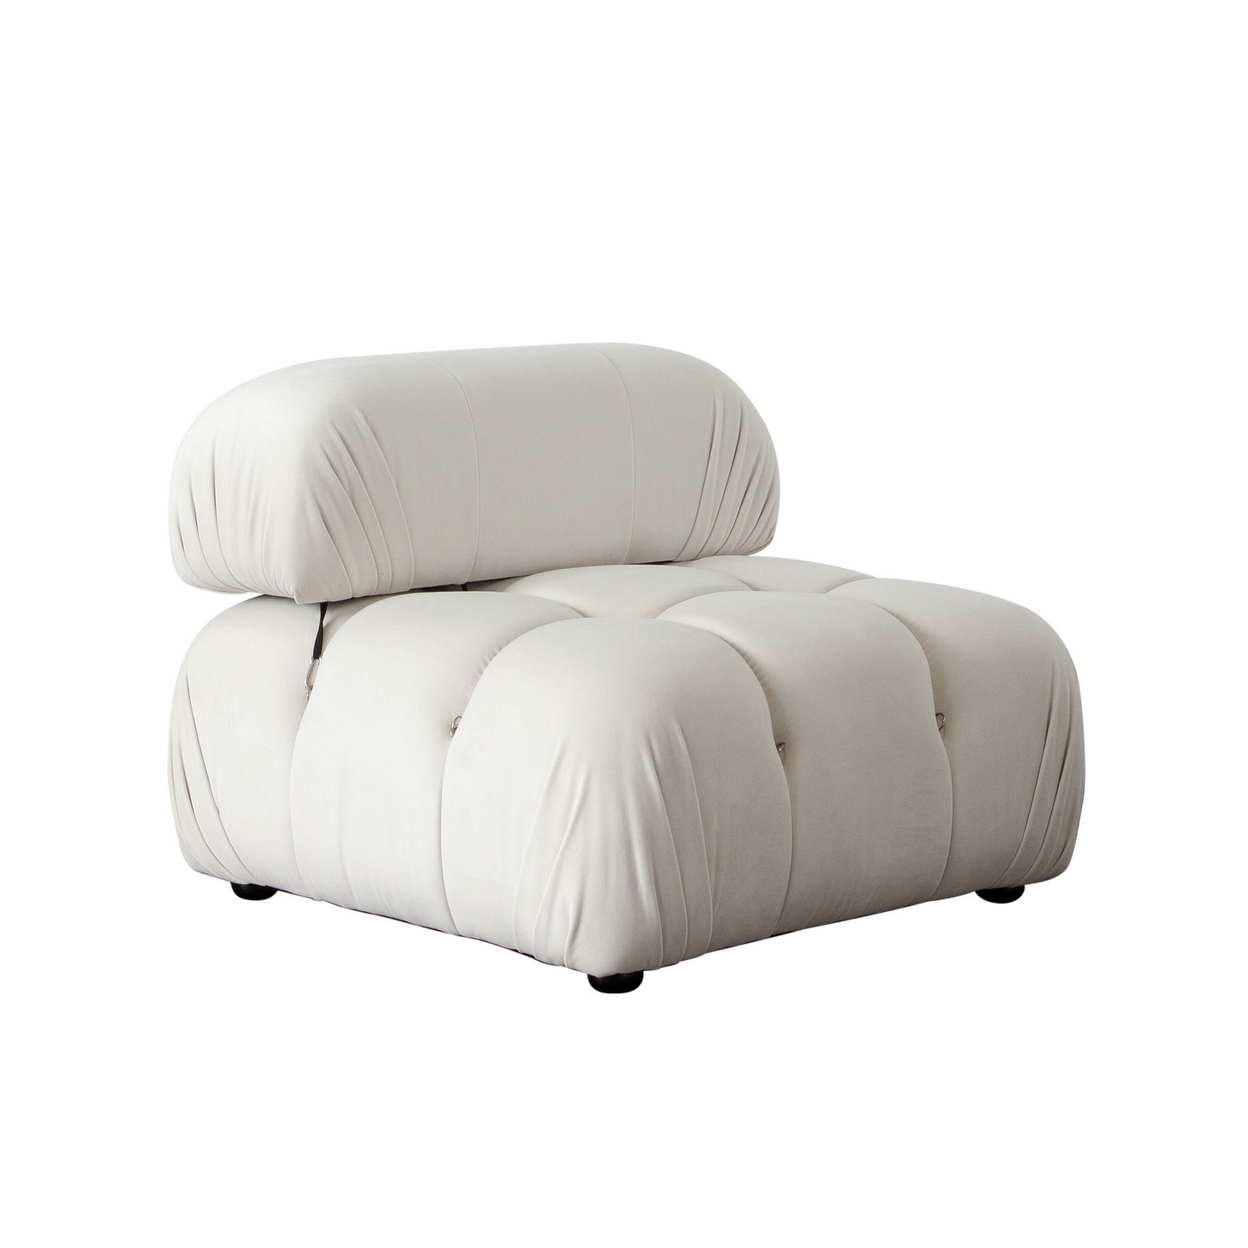 Nod 37 Inch Armless Chair, Cushioned Seating, Square Tufting, White, Black- Saltoro Sherpi